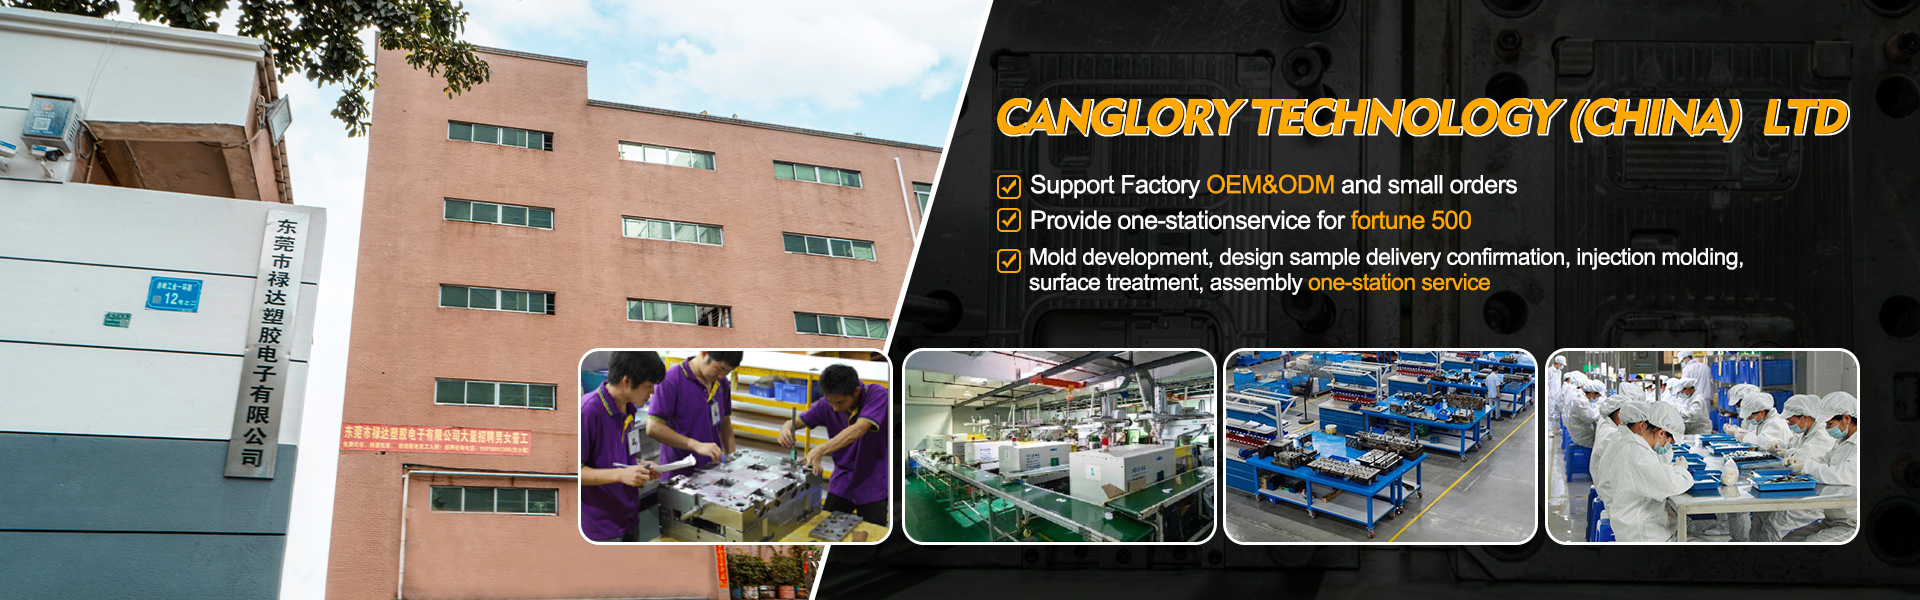 Heim - Formteile, Injektion, Originalausrüstungshersteller|Canglory Technology (China) Ltd.